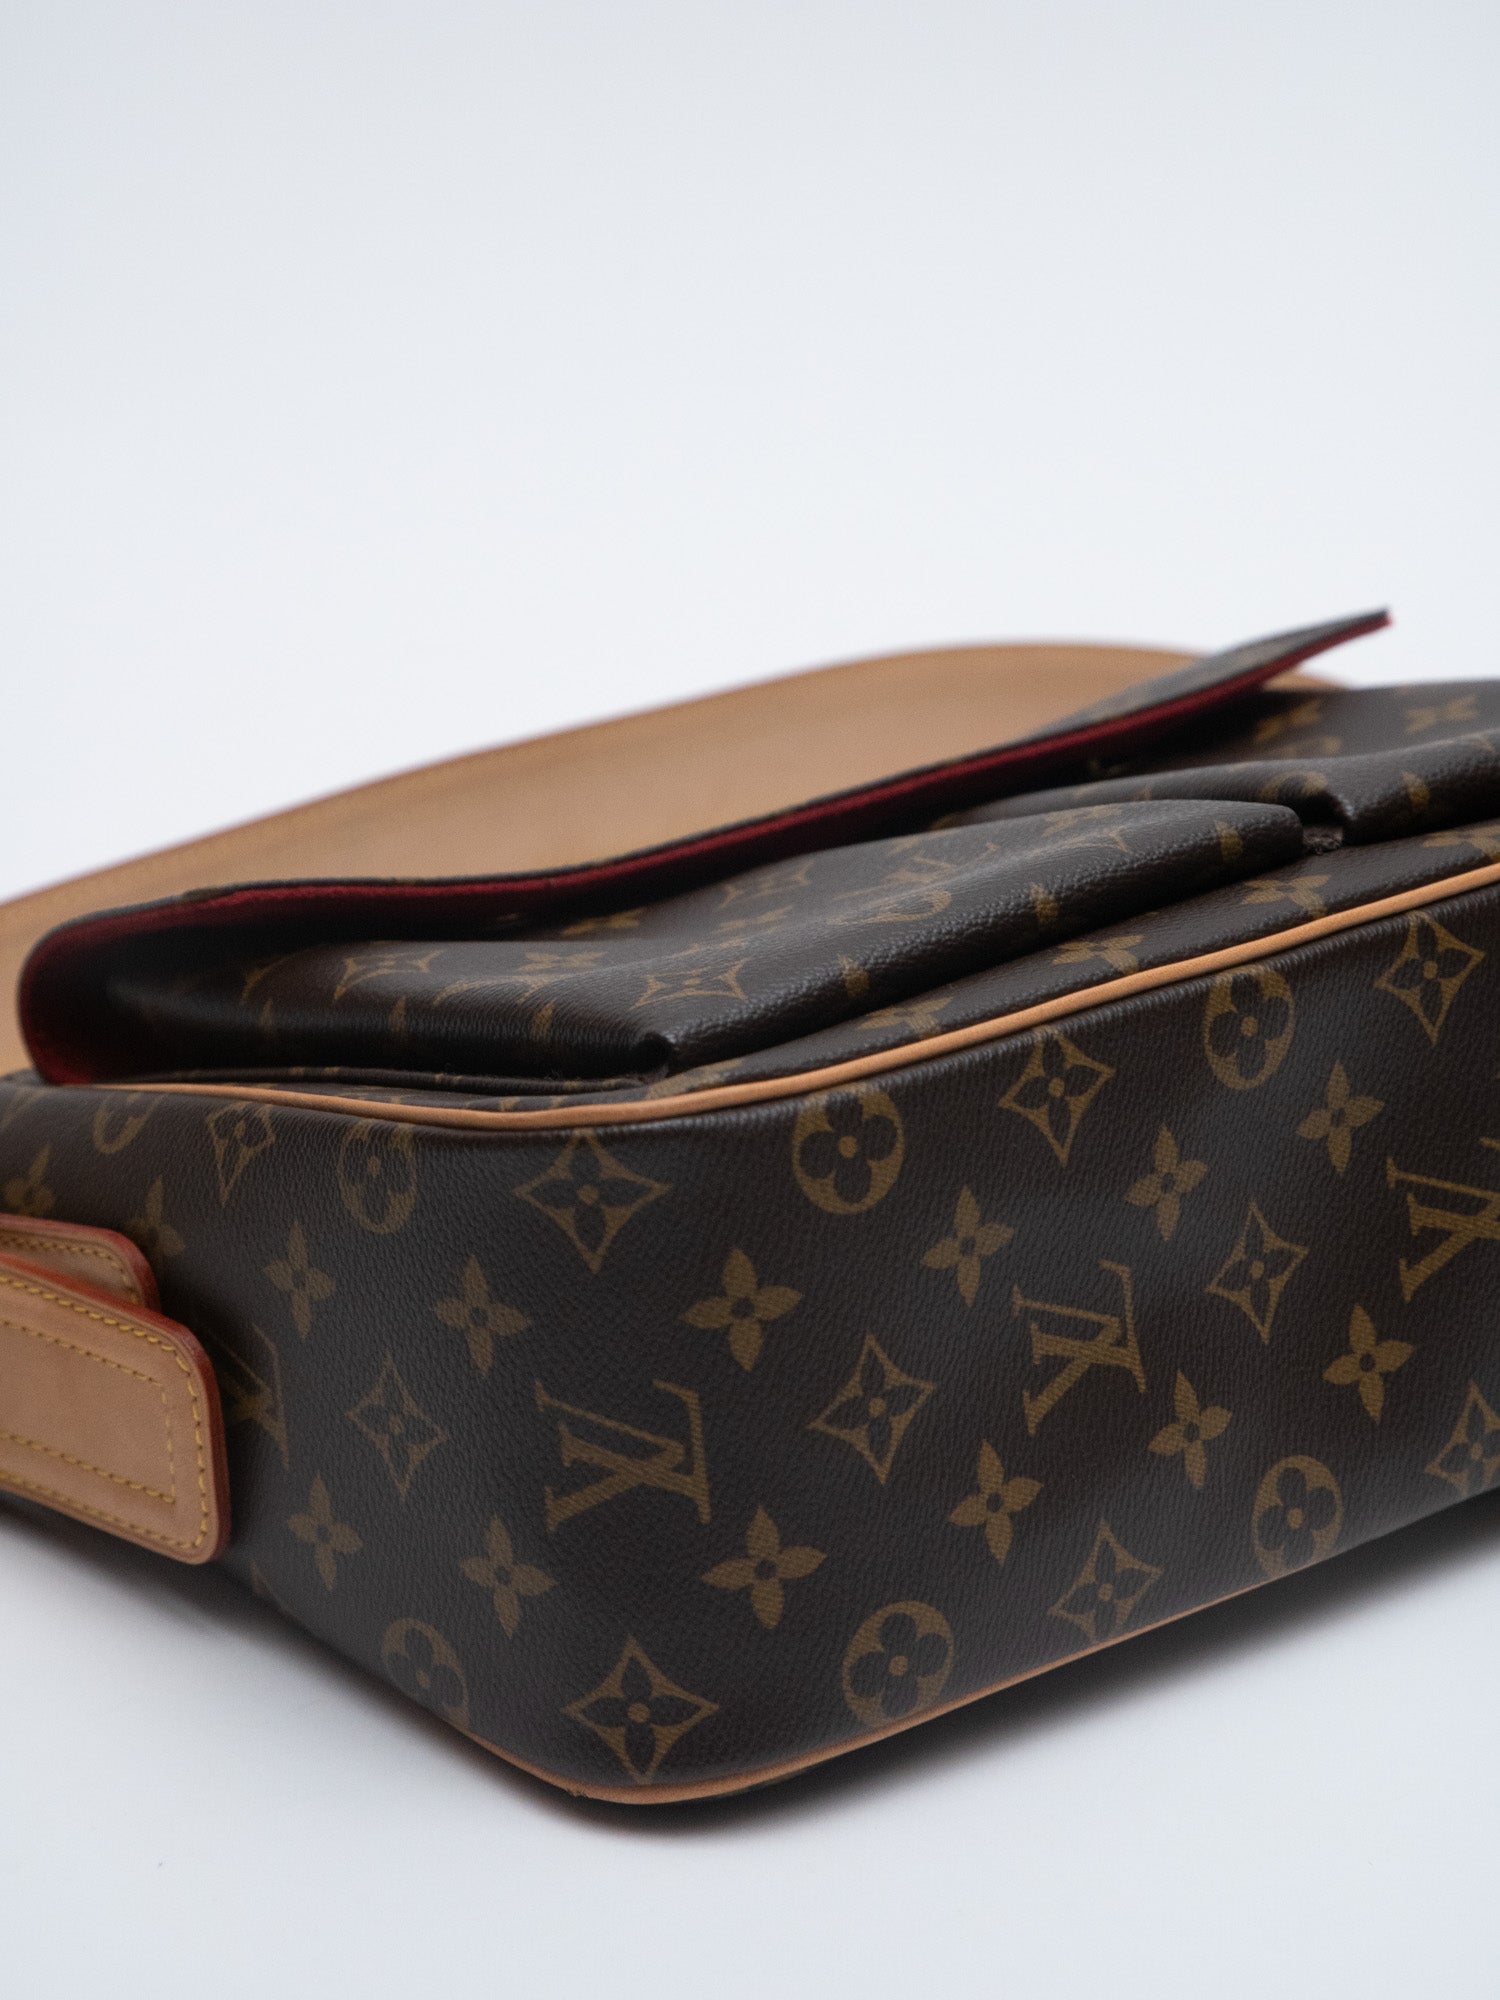 Authentic Louis Vuitton Monogram Vita Cite GM M51163 Shoulder Bag